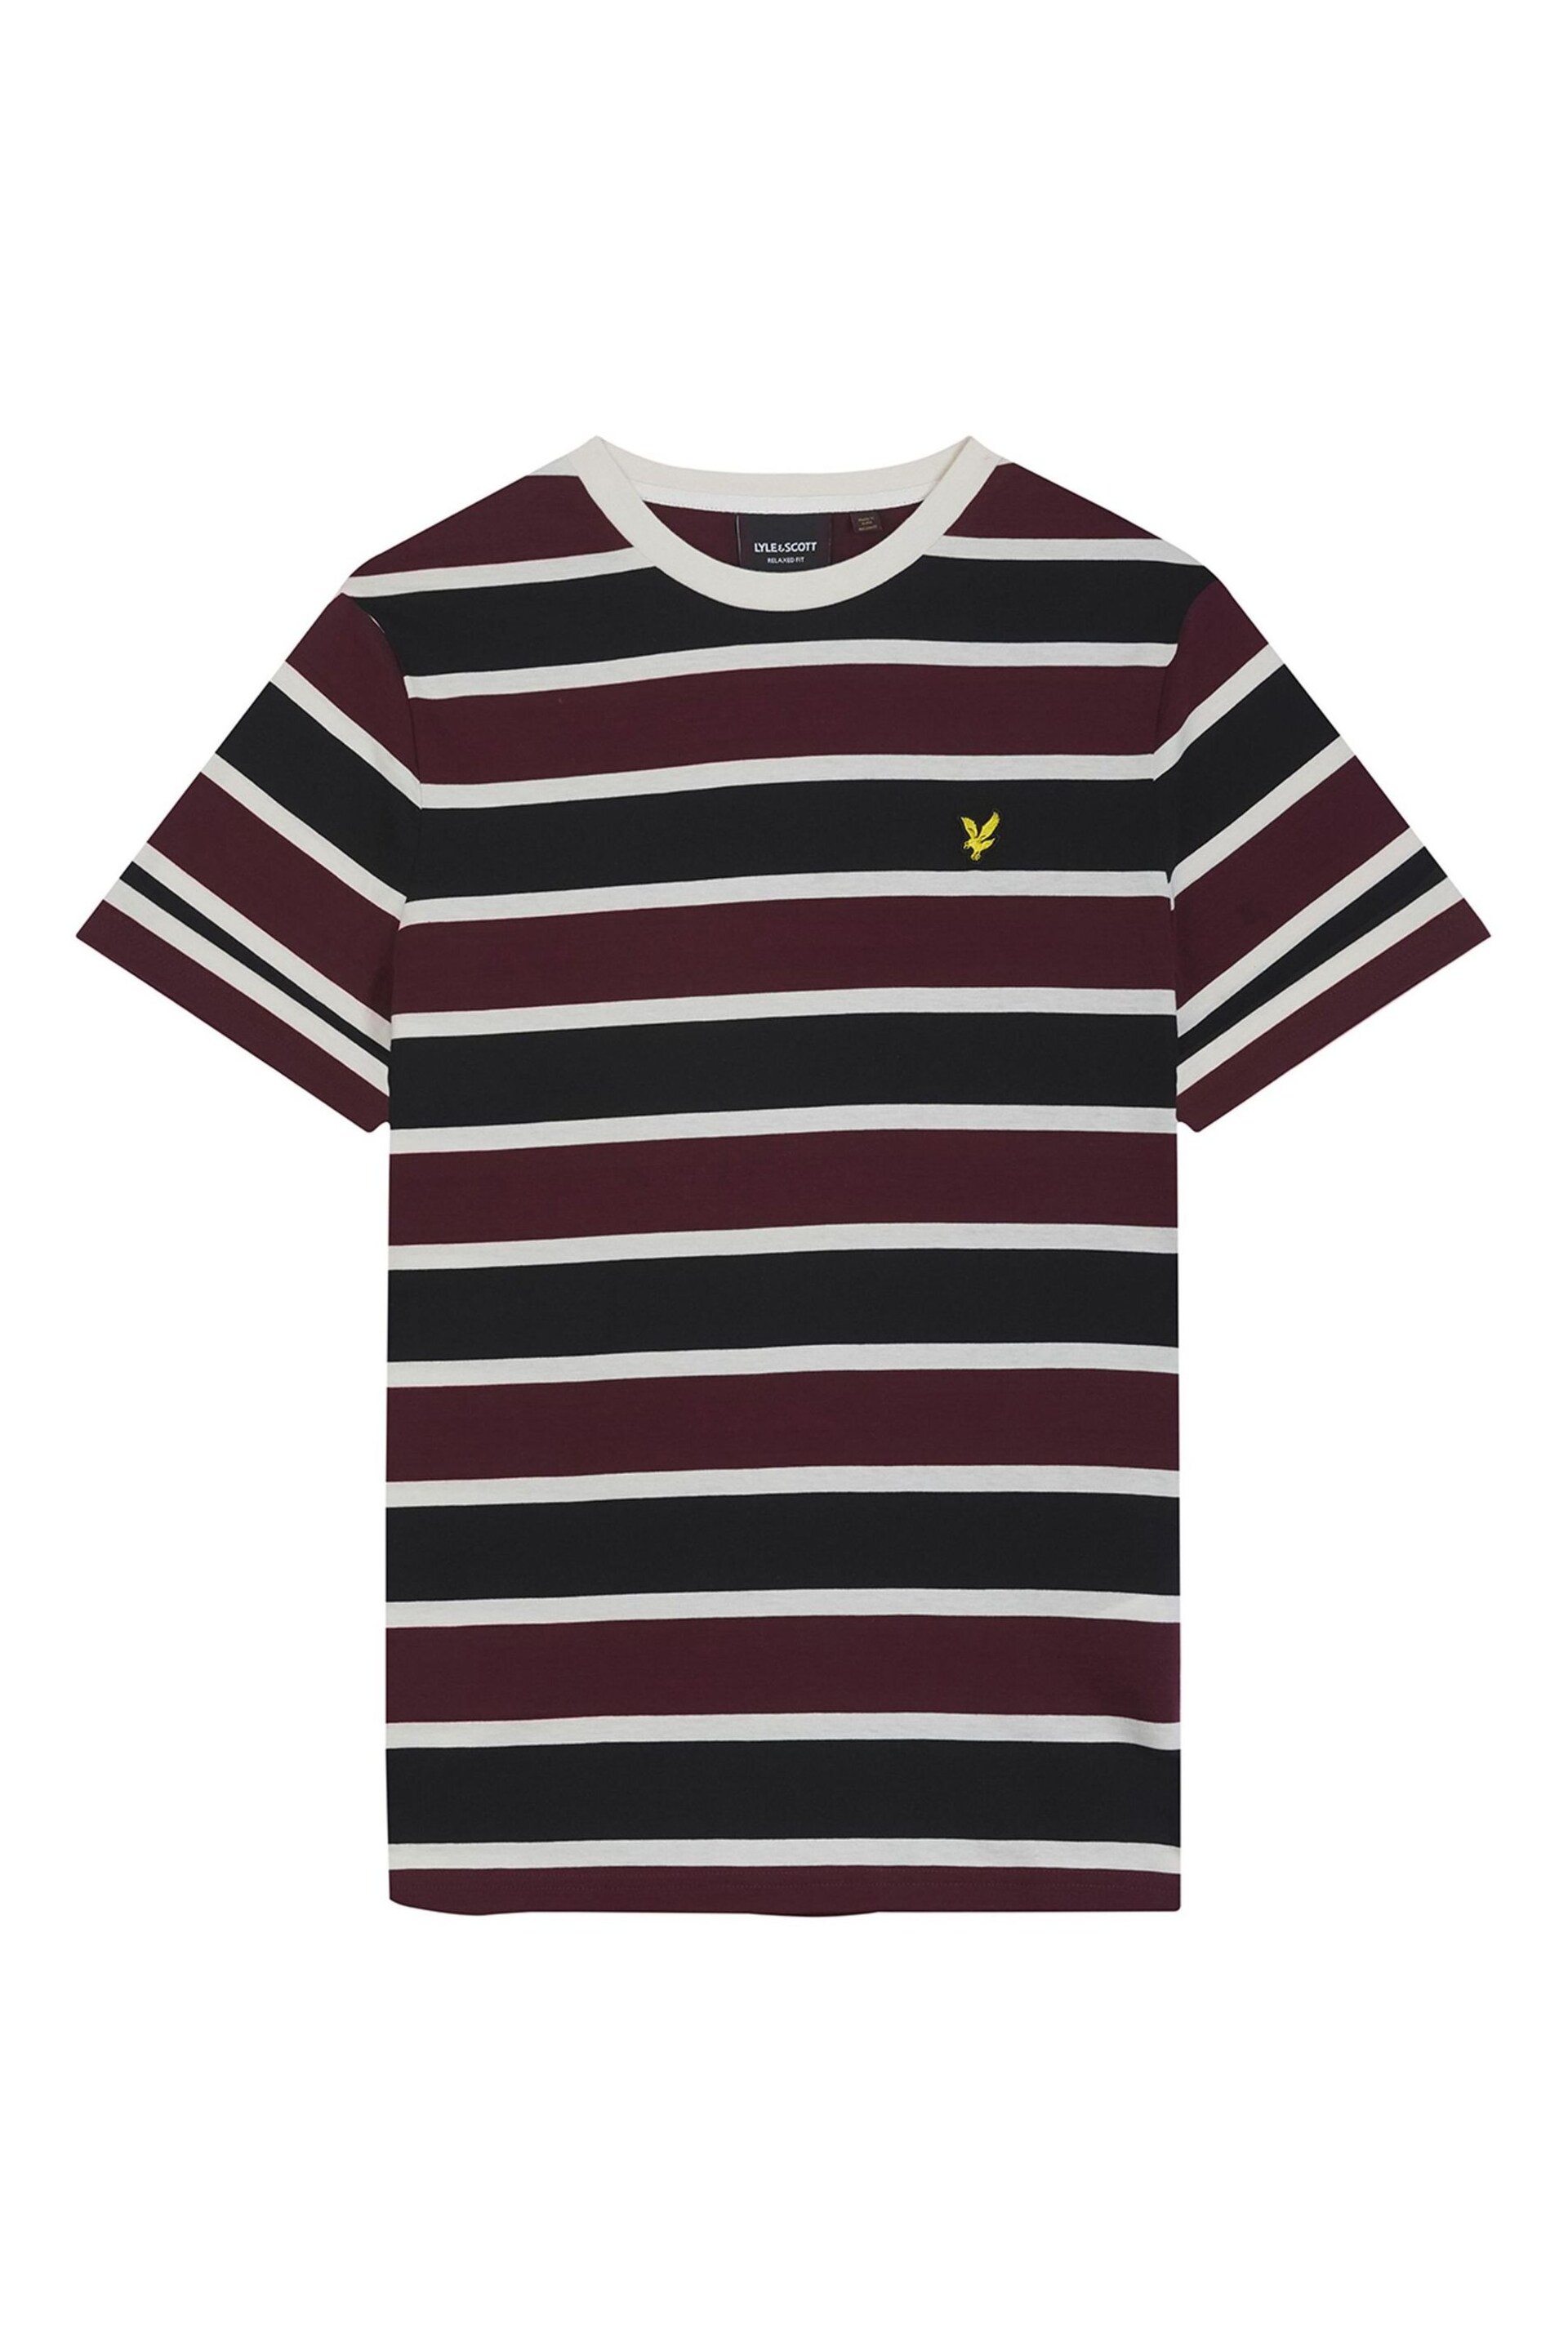 Lyle & Scott Red Stripe T-Shirt - Image 5 of 5